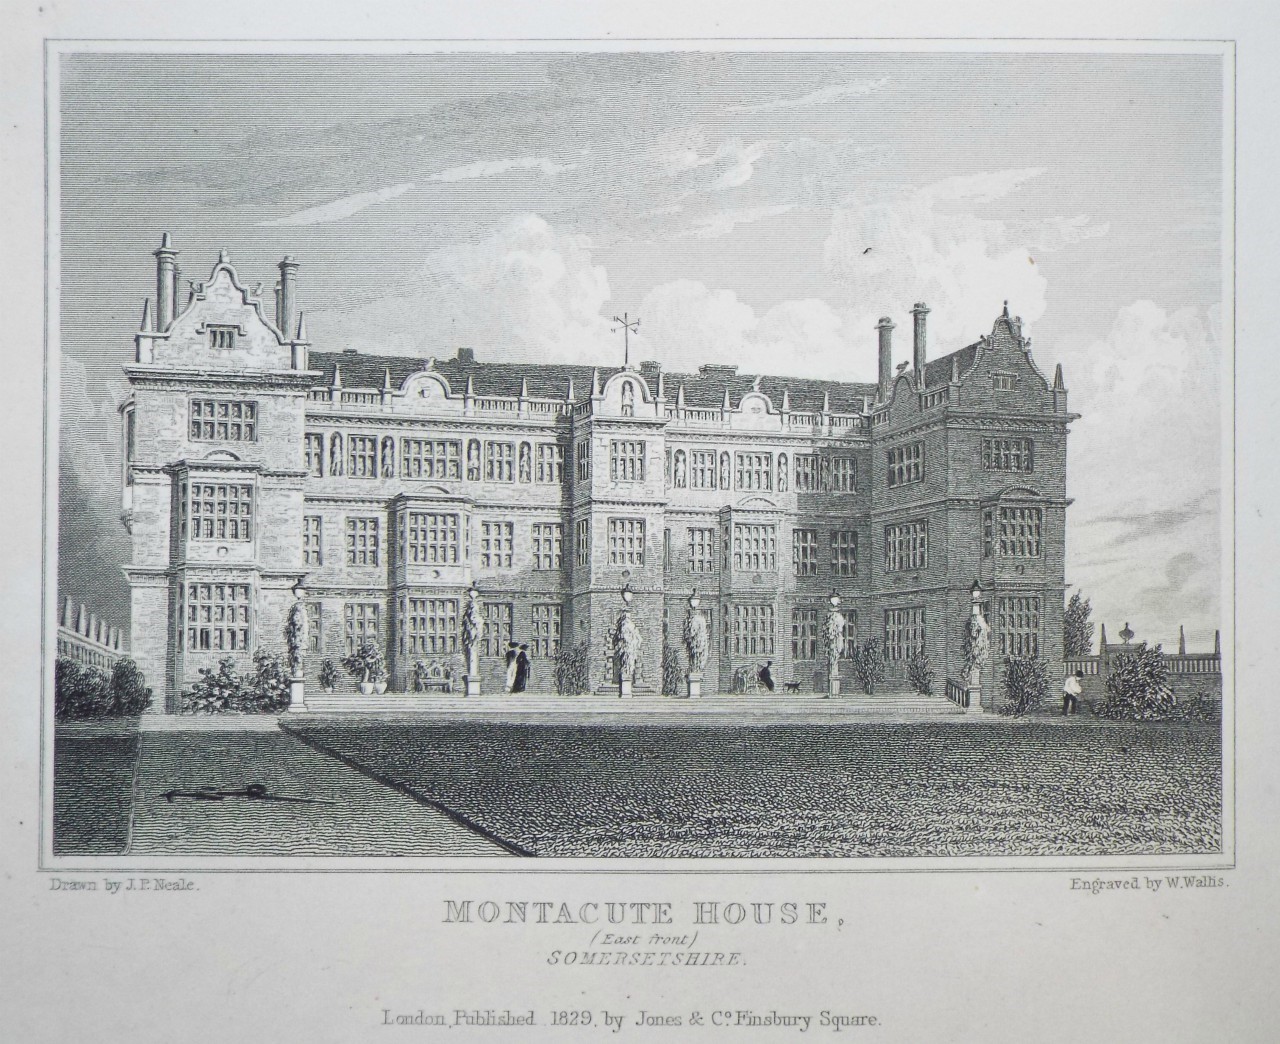 Print - Montacute House, (East Front) Somersetshire. - Wallis